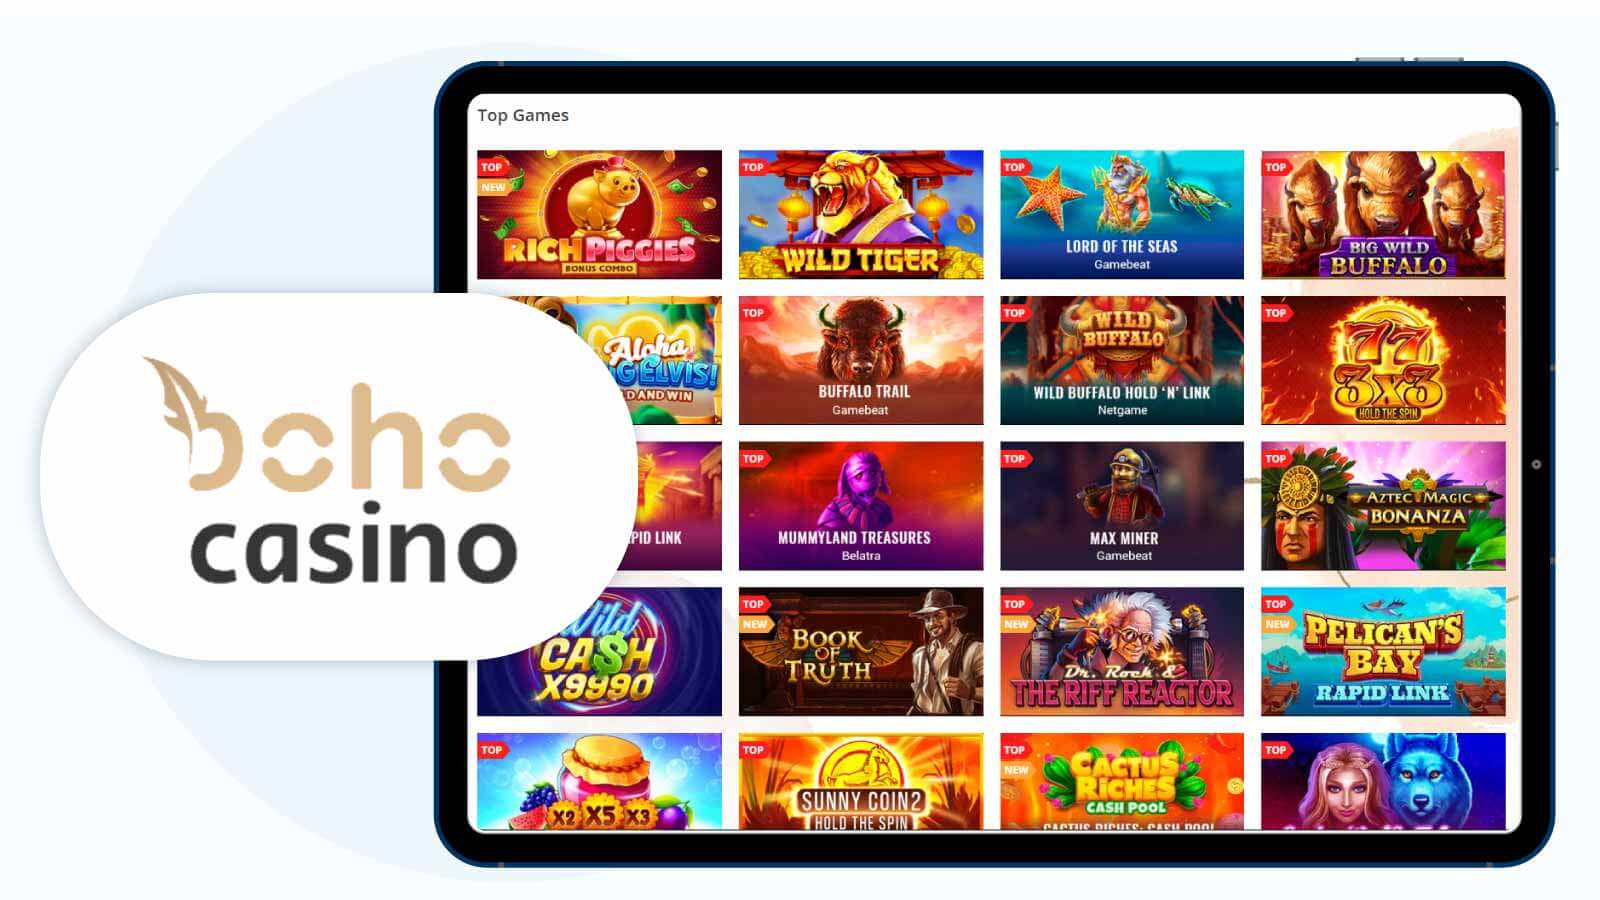 3. Boho Casino Discover the Best Casino Bonus for Welcome Package